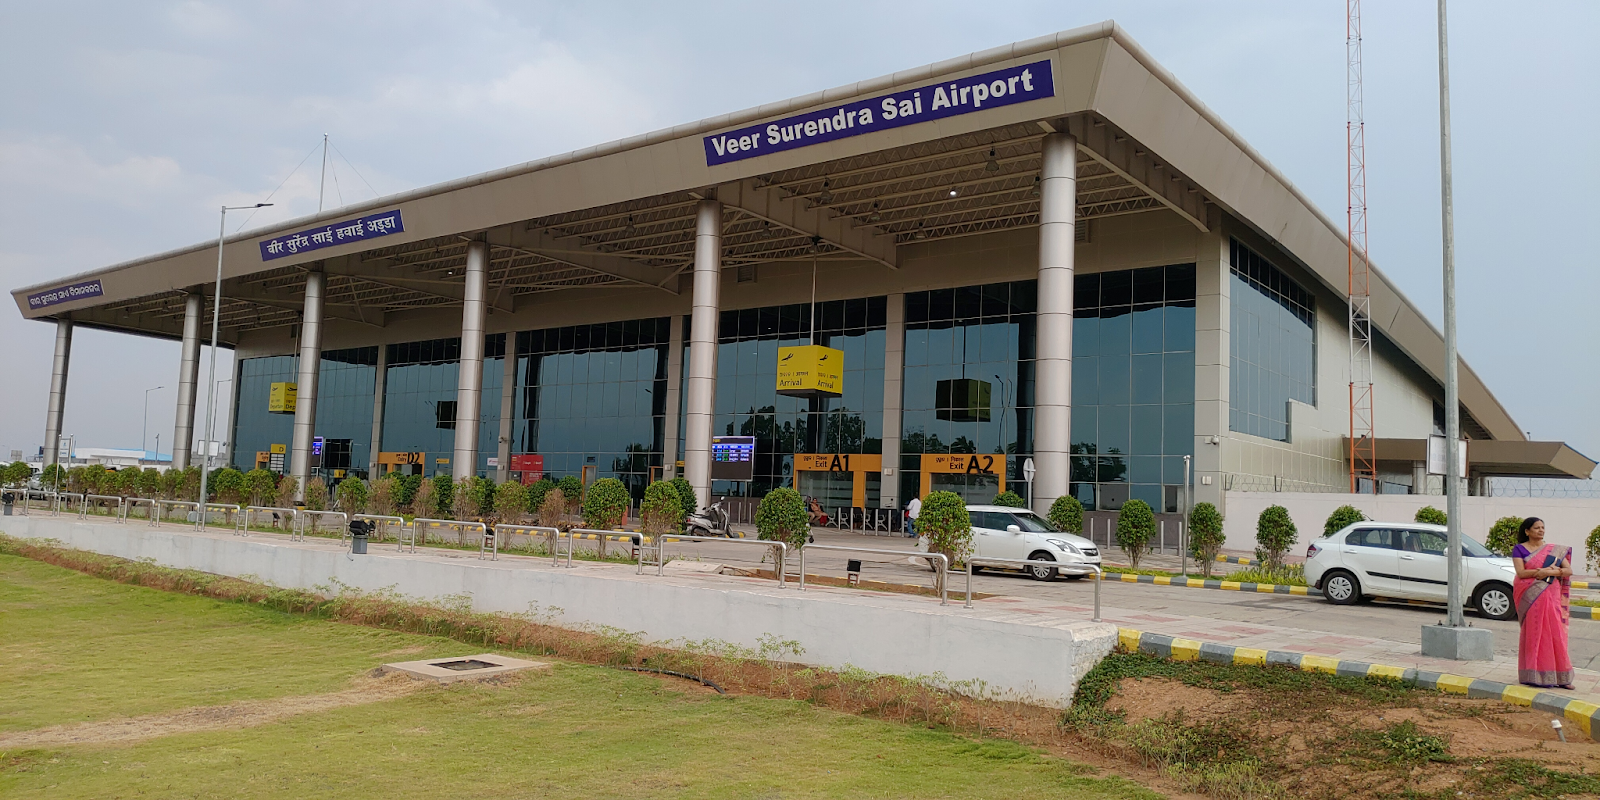 Veer Surendra Sai Airport (JRG)